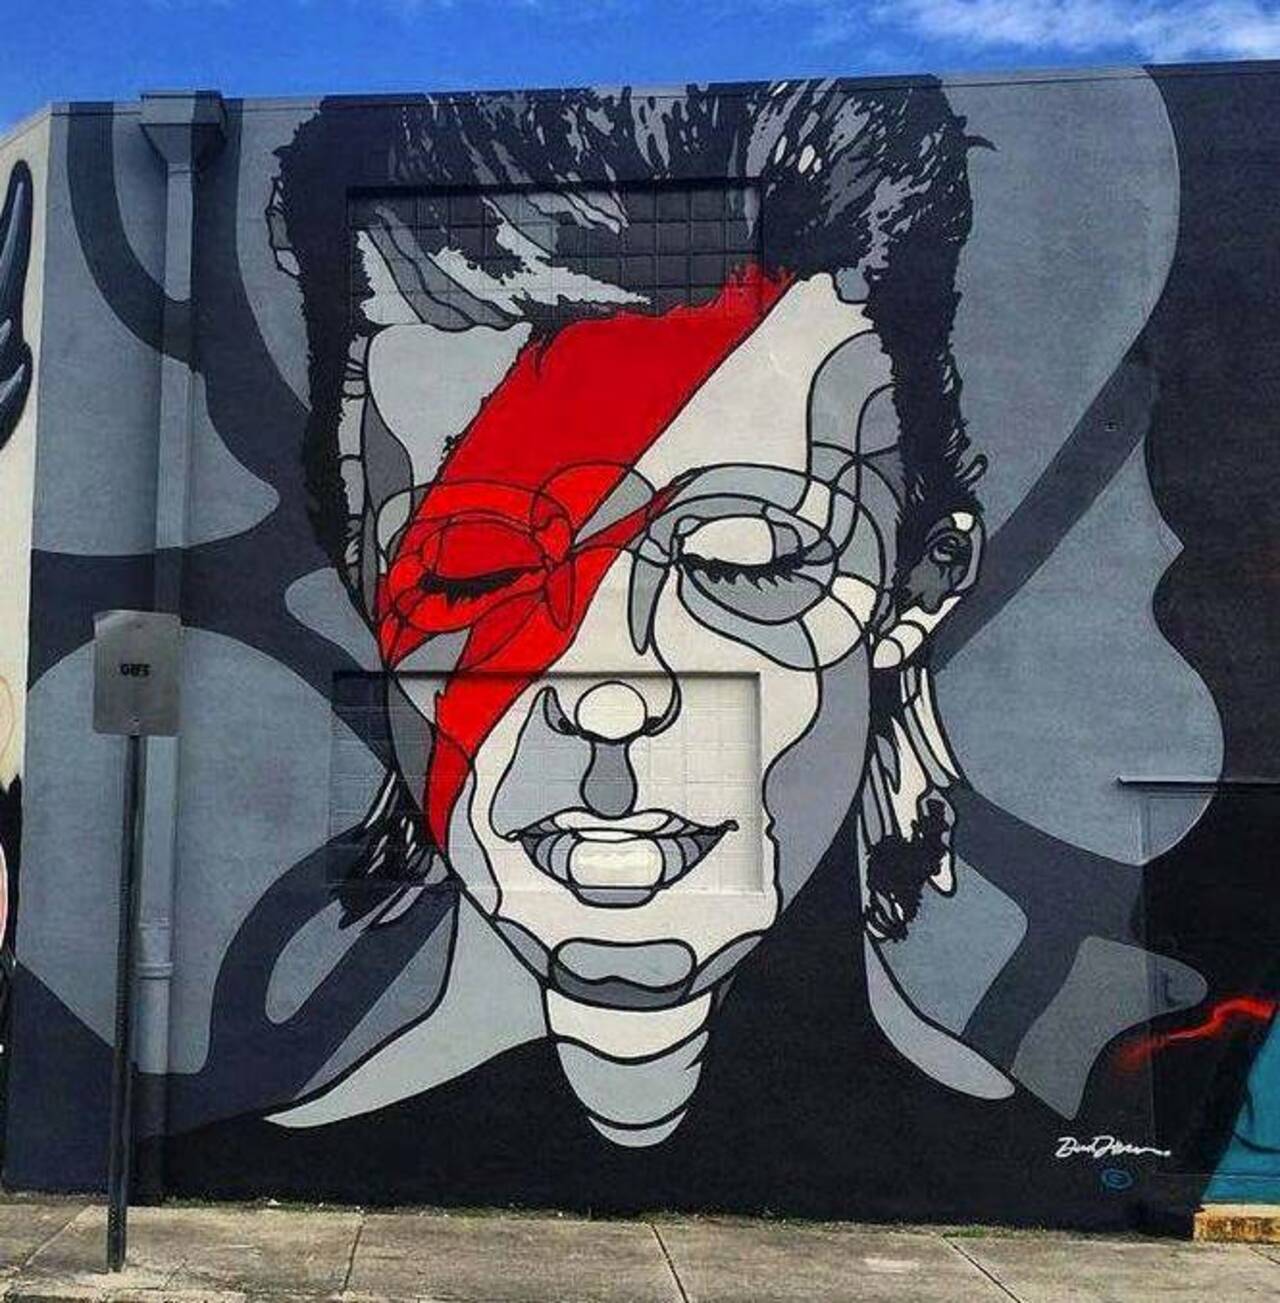 #streetart #urbanart #graffiti #mural David Bowie by David Flores in Wynwood, Miami https://t.co/YA1zGLKVlO